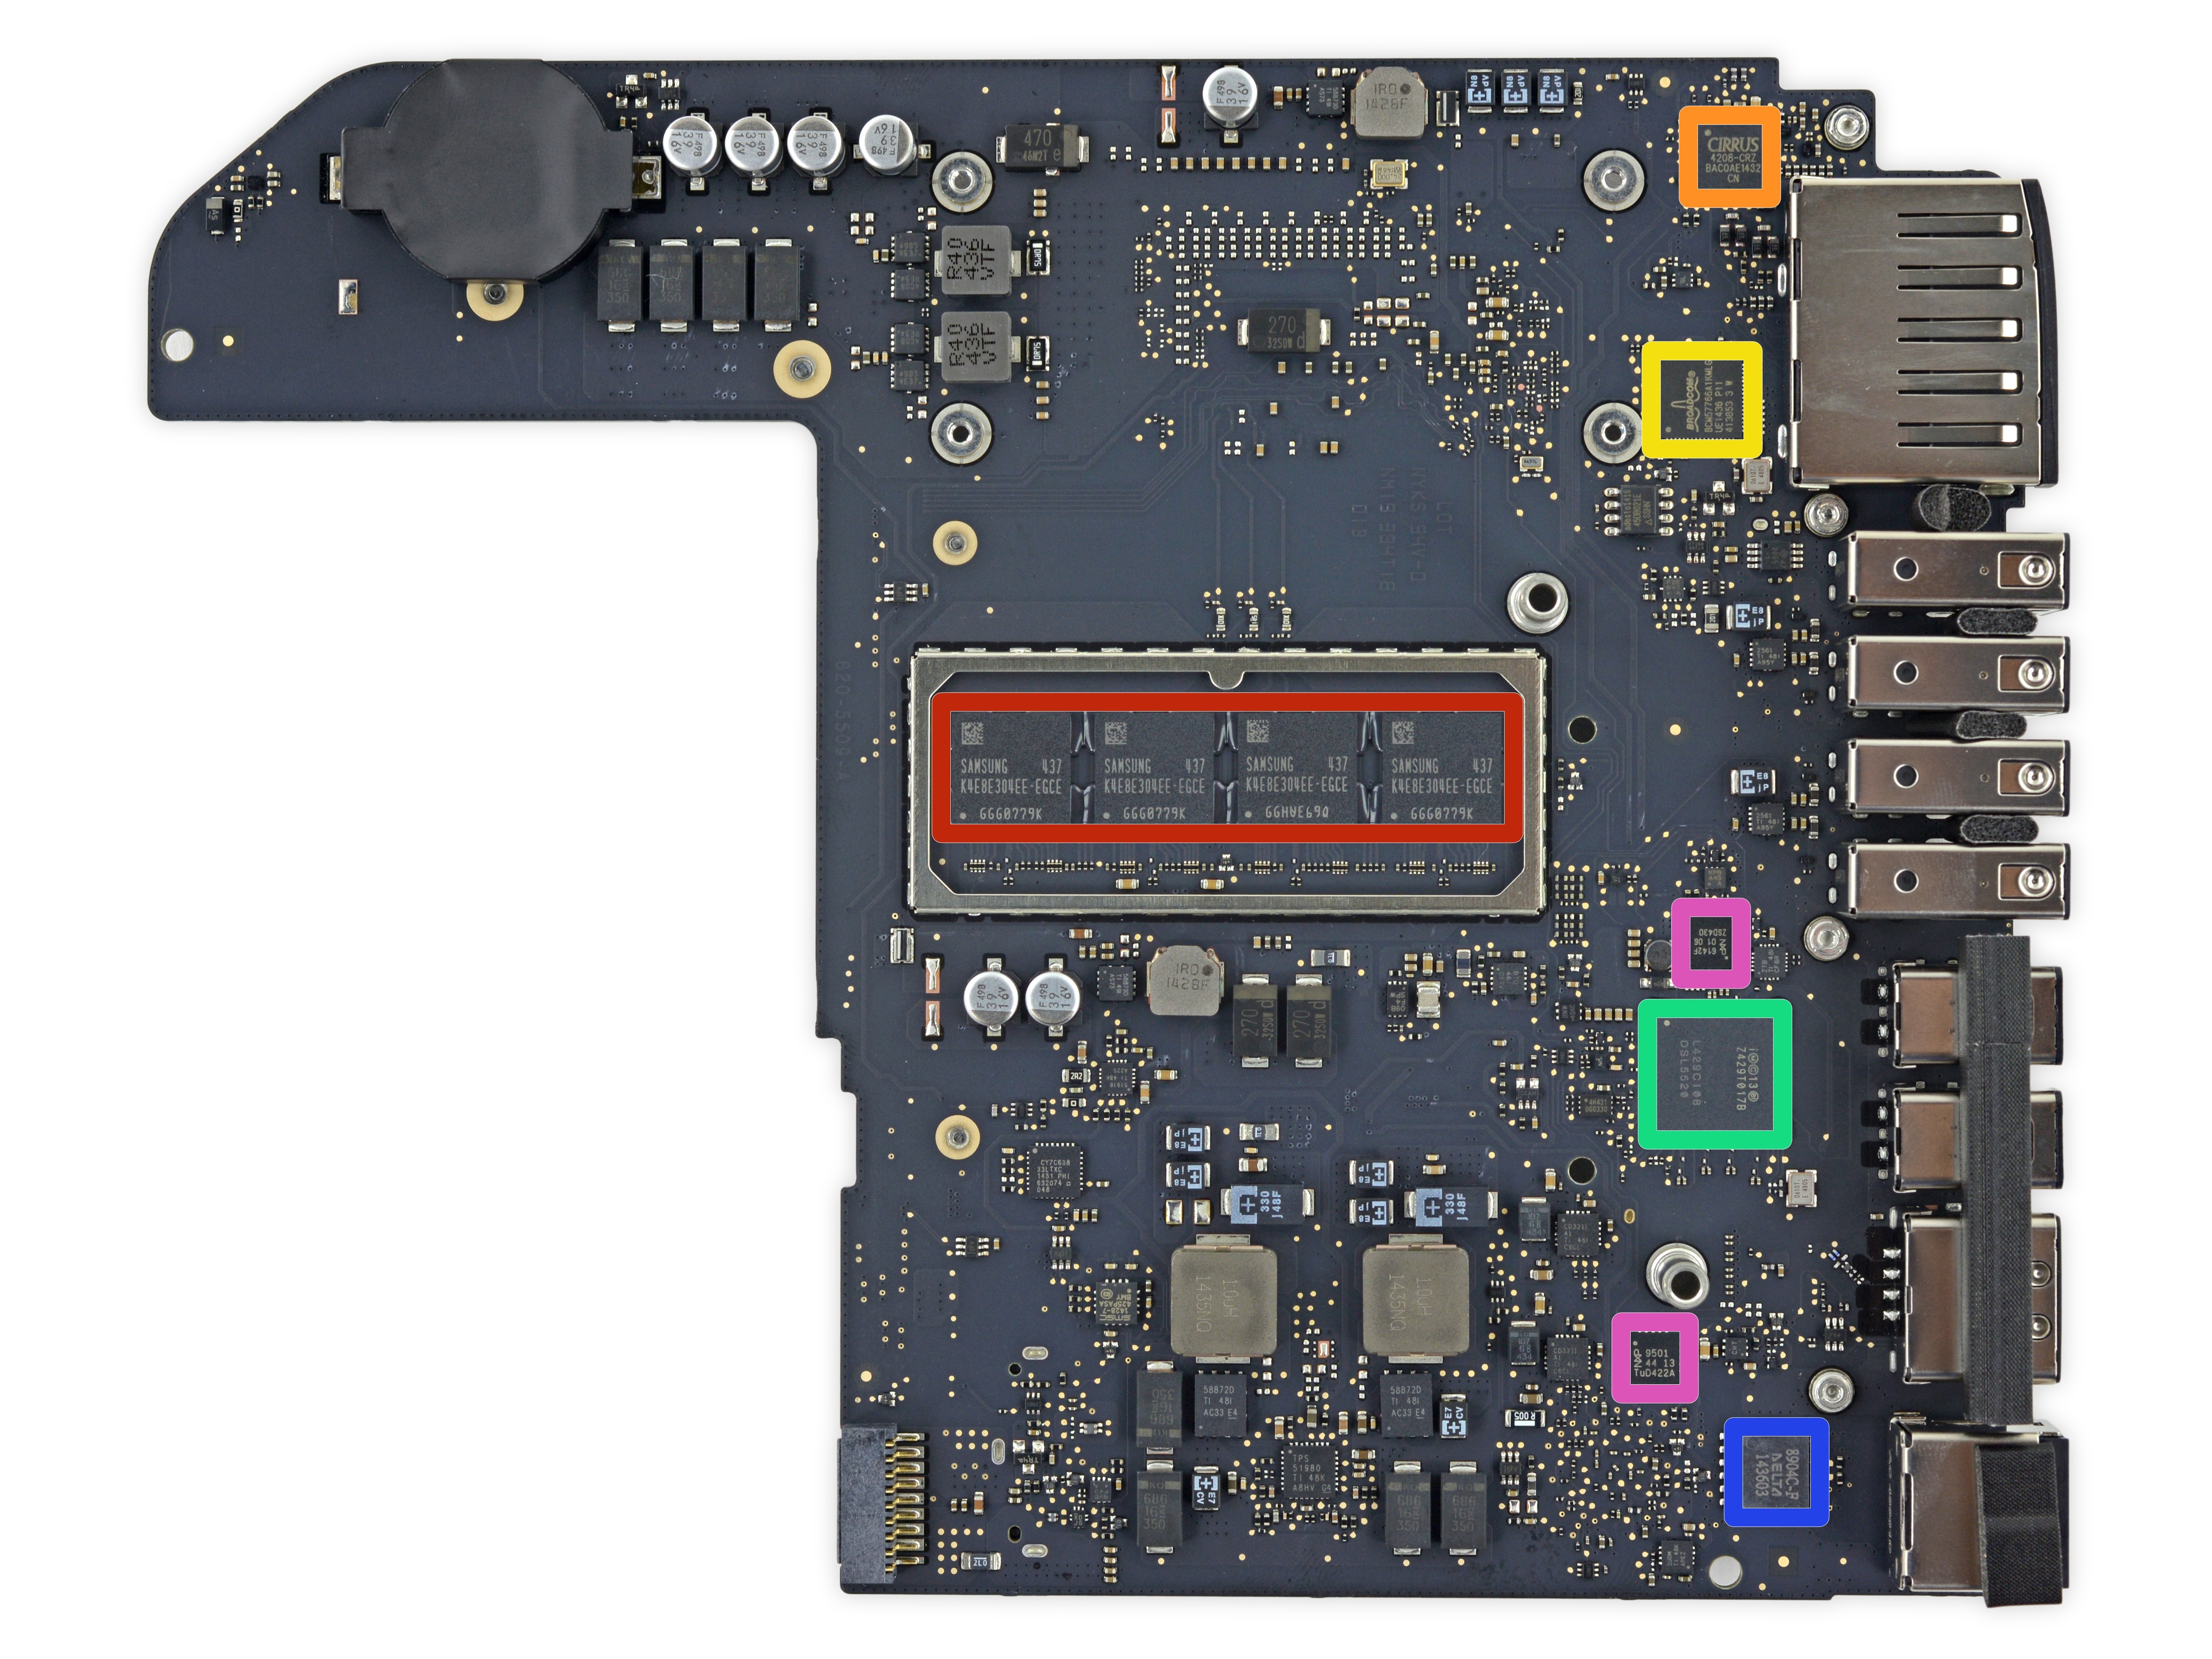 2014 Mac Mini teardown shows a sealed, less-upgradeable redesign | Ars Technica